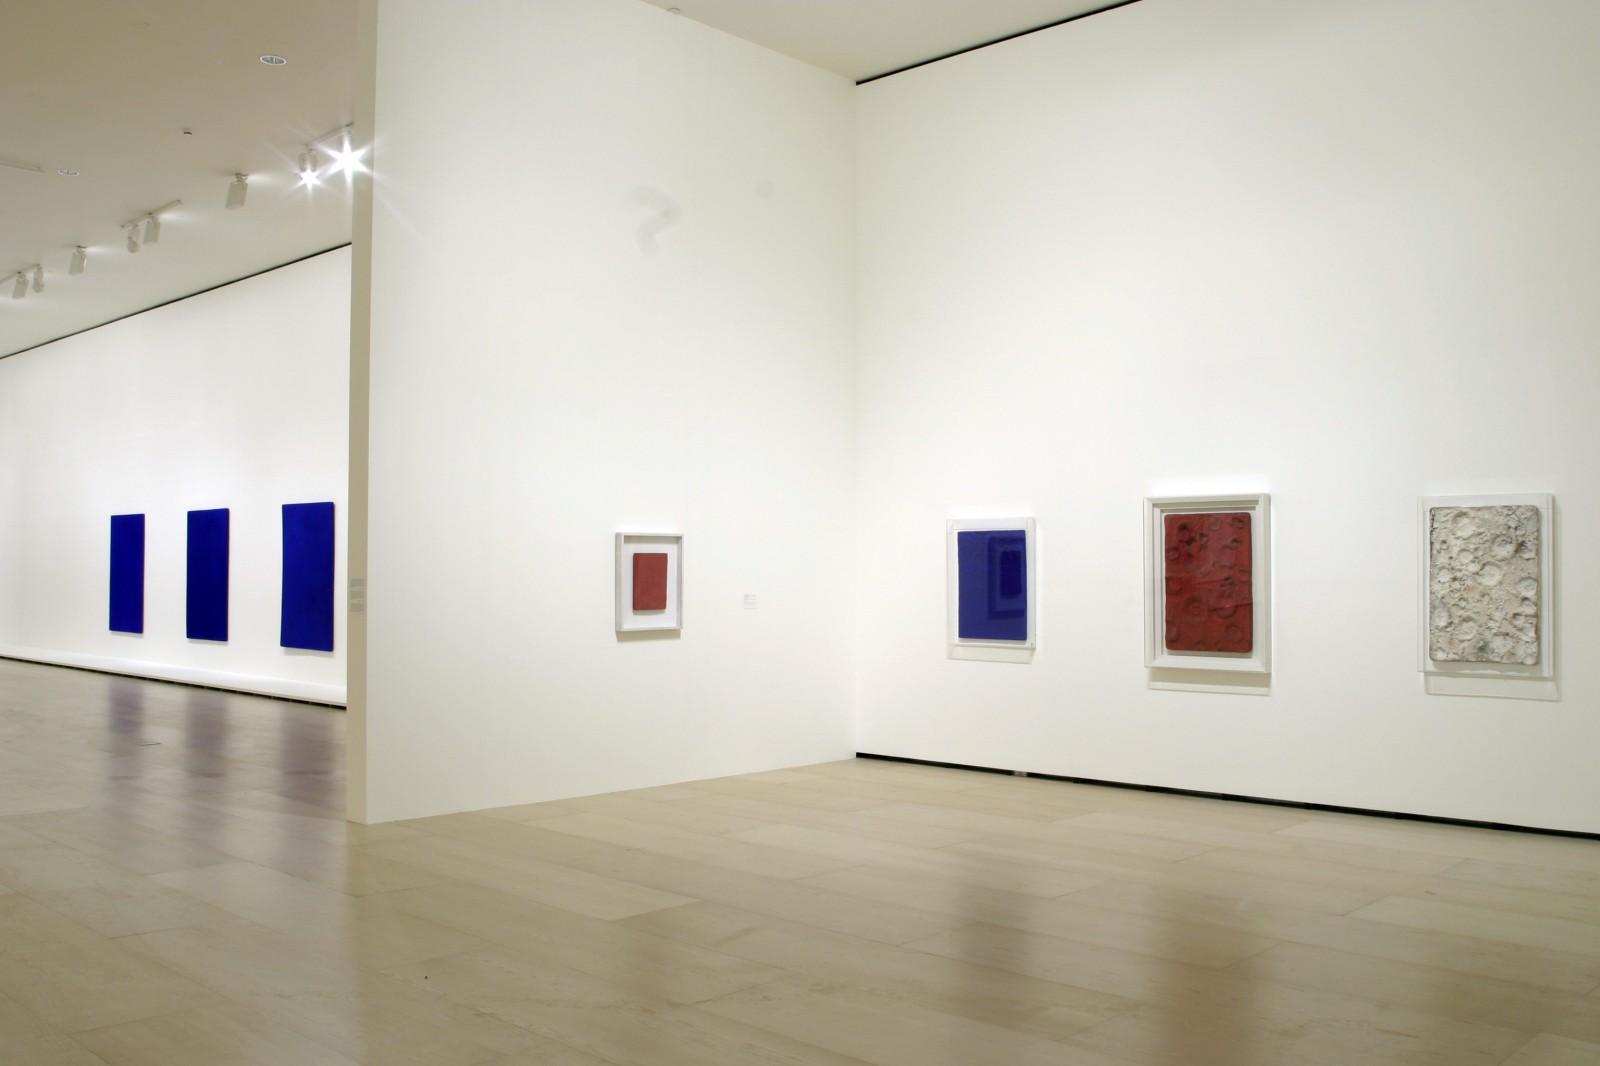 Vue de l'exposition "Yves Klein", Guggenheim Museum Bilbao, 2005